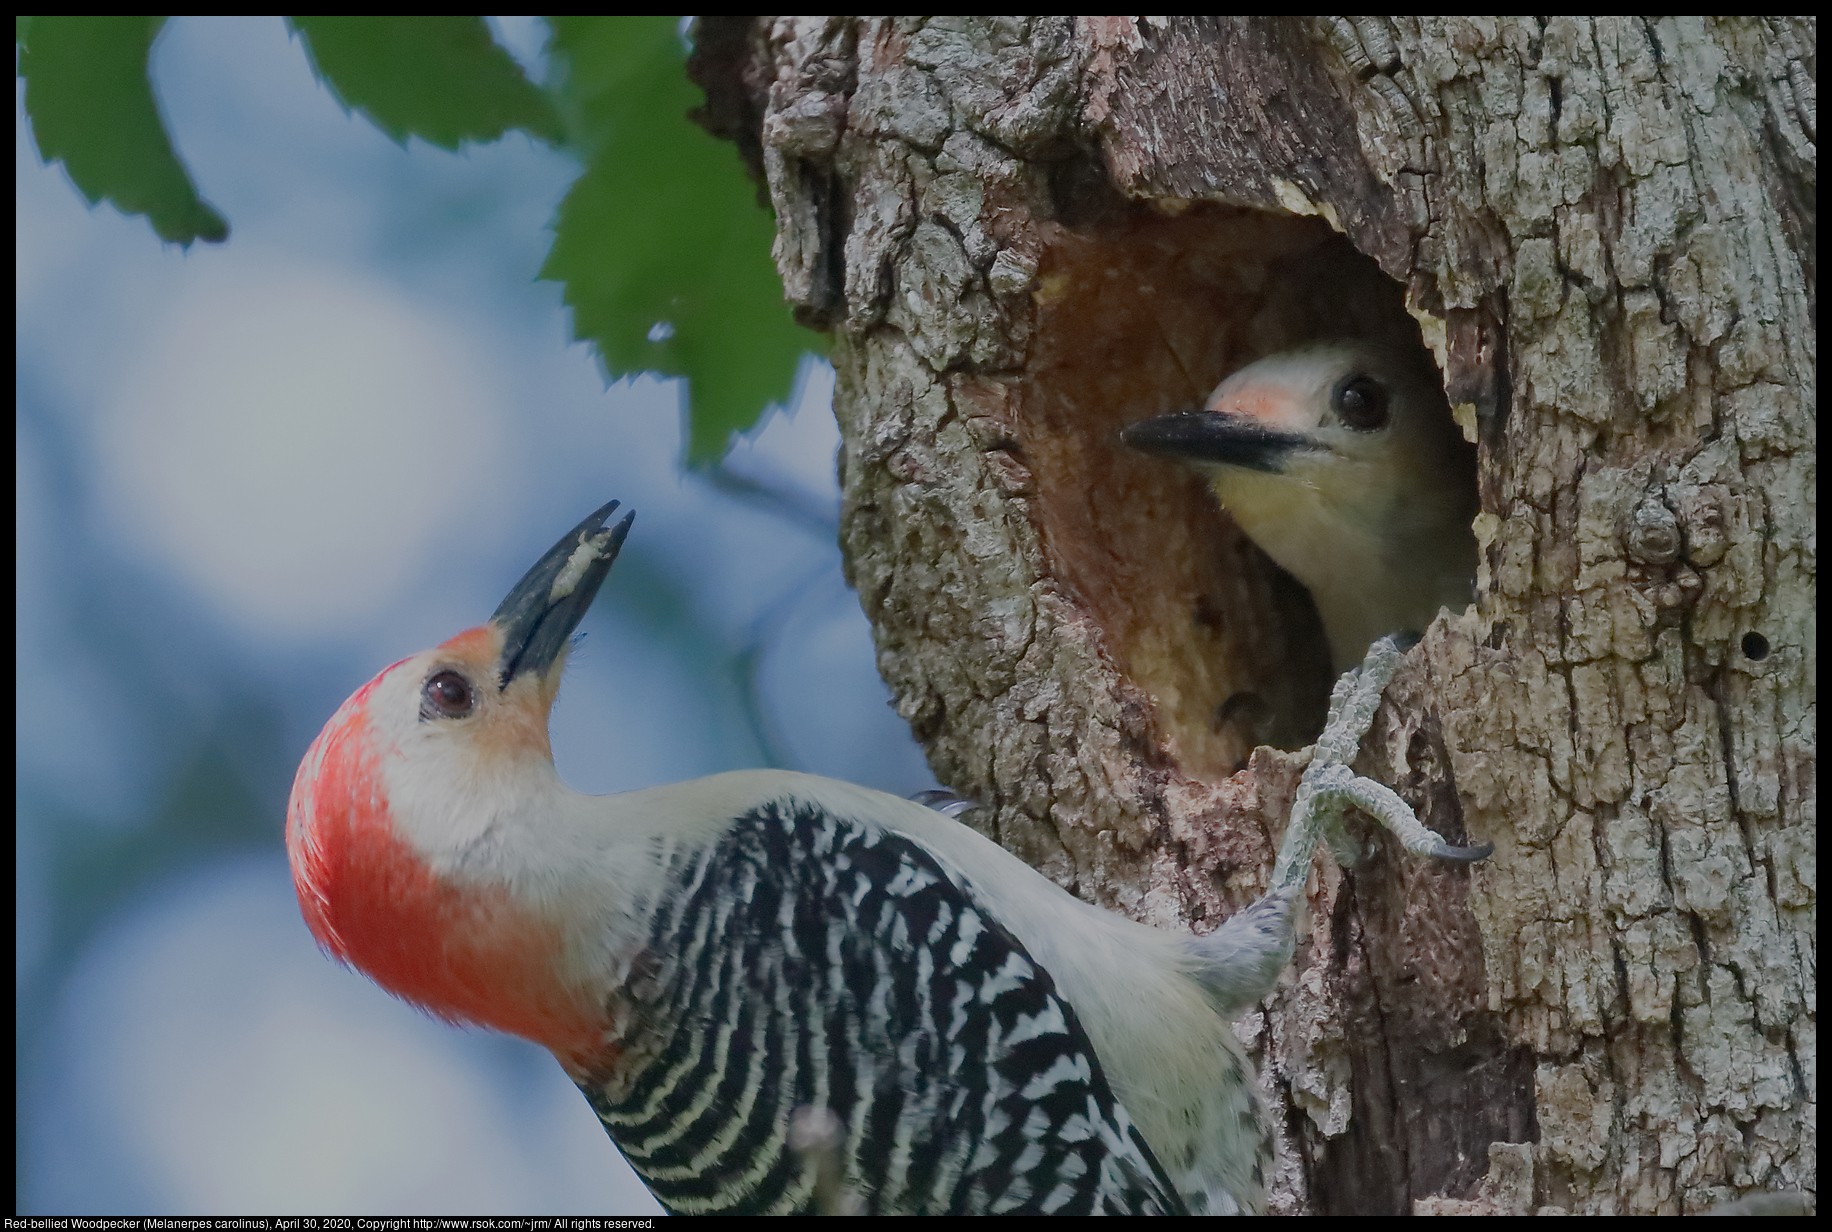 Red-bellied Woodpecker (Melanerpes carolinus), April 30, 2020